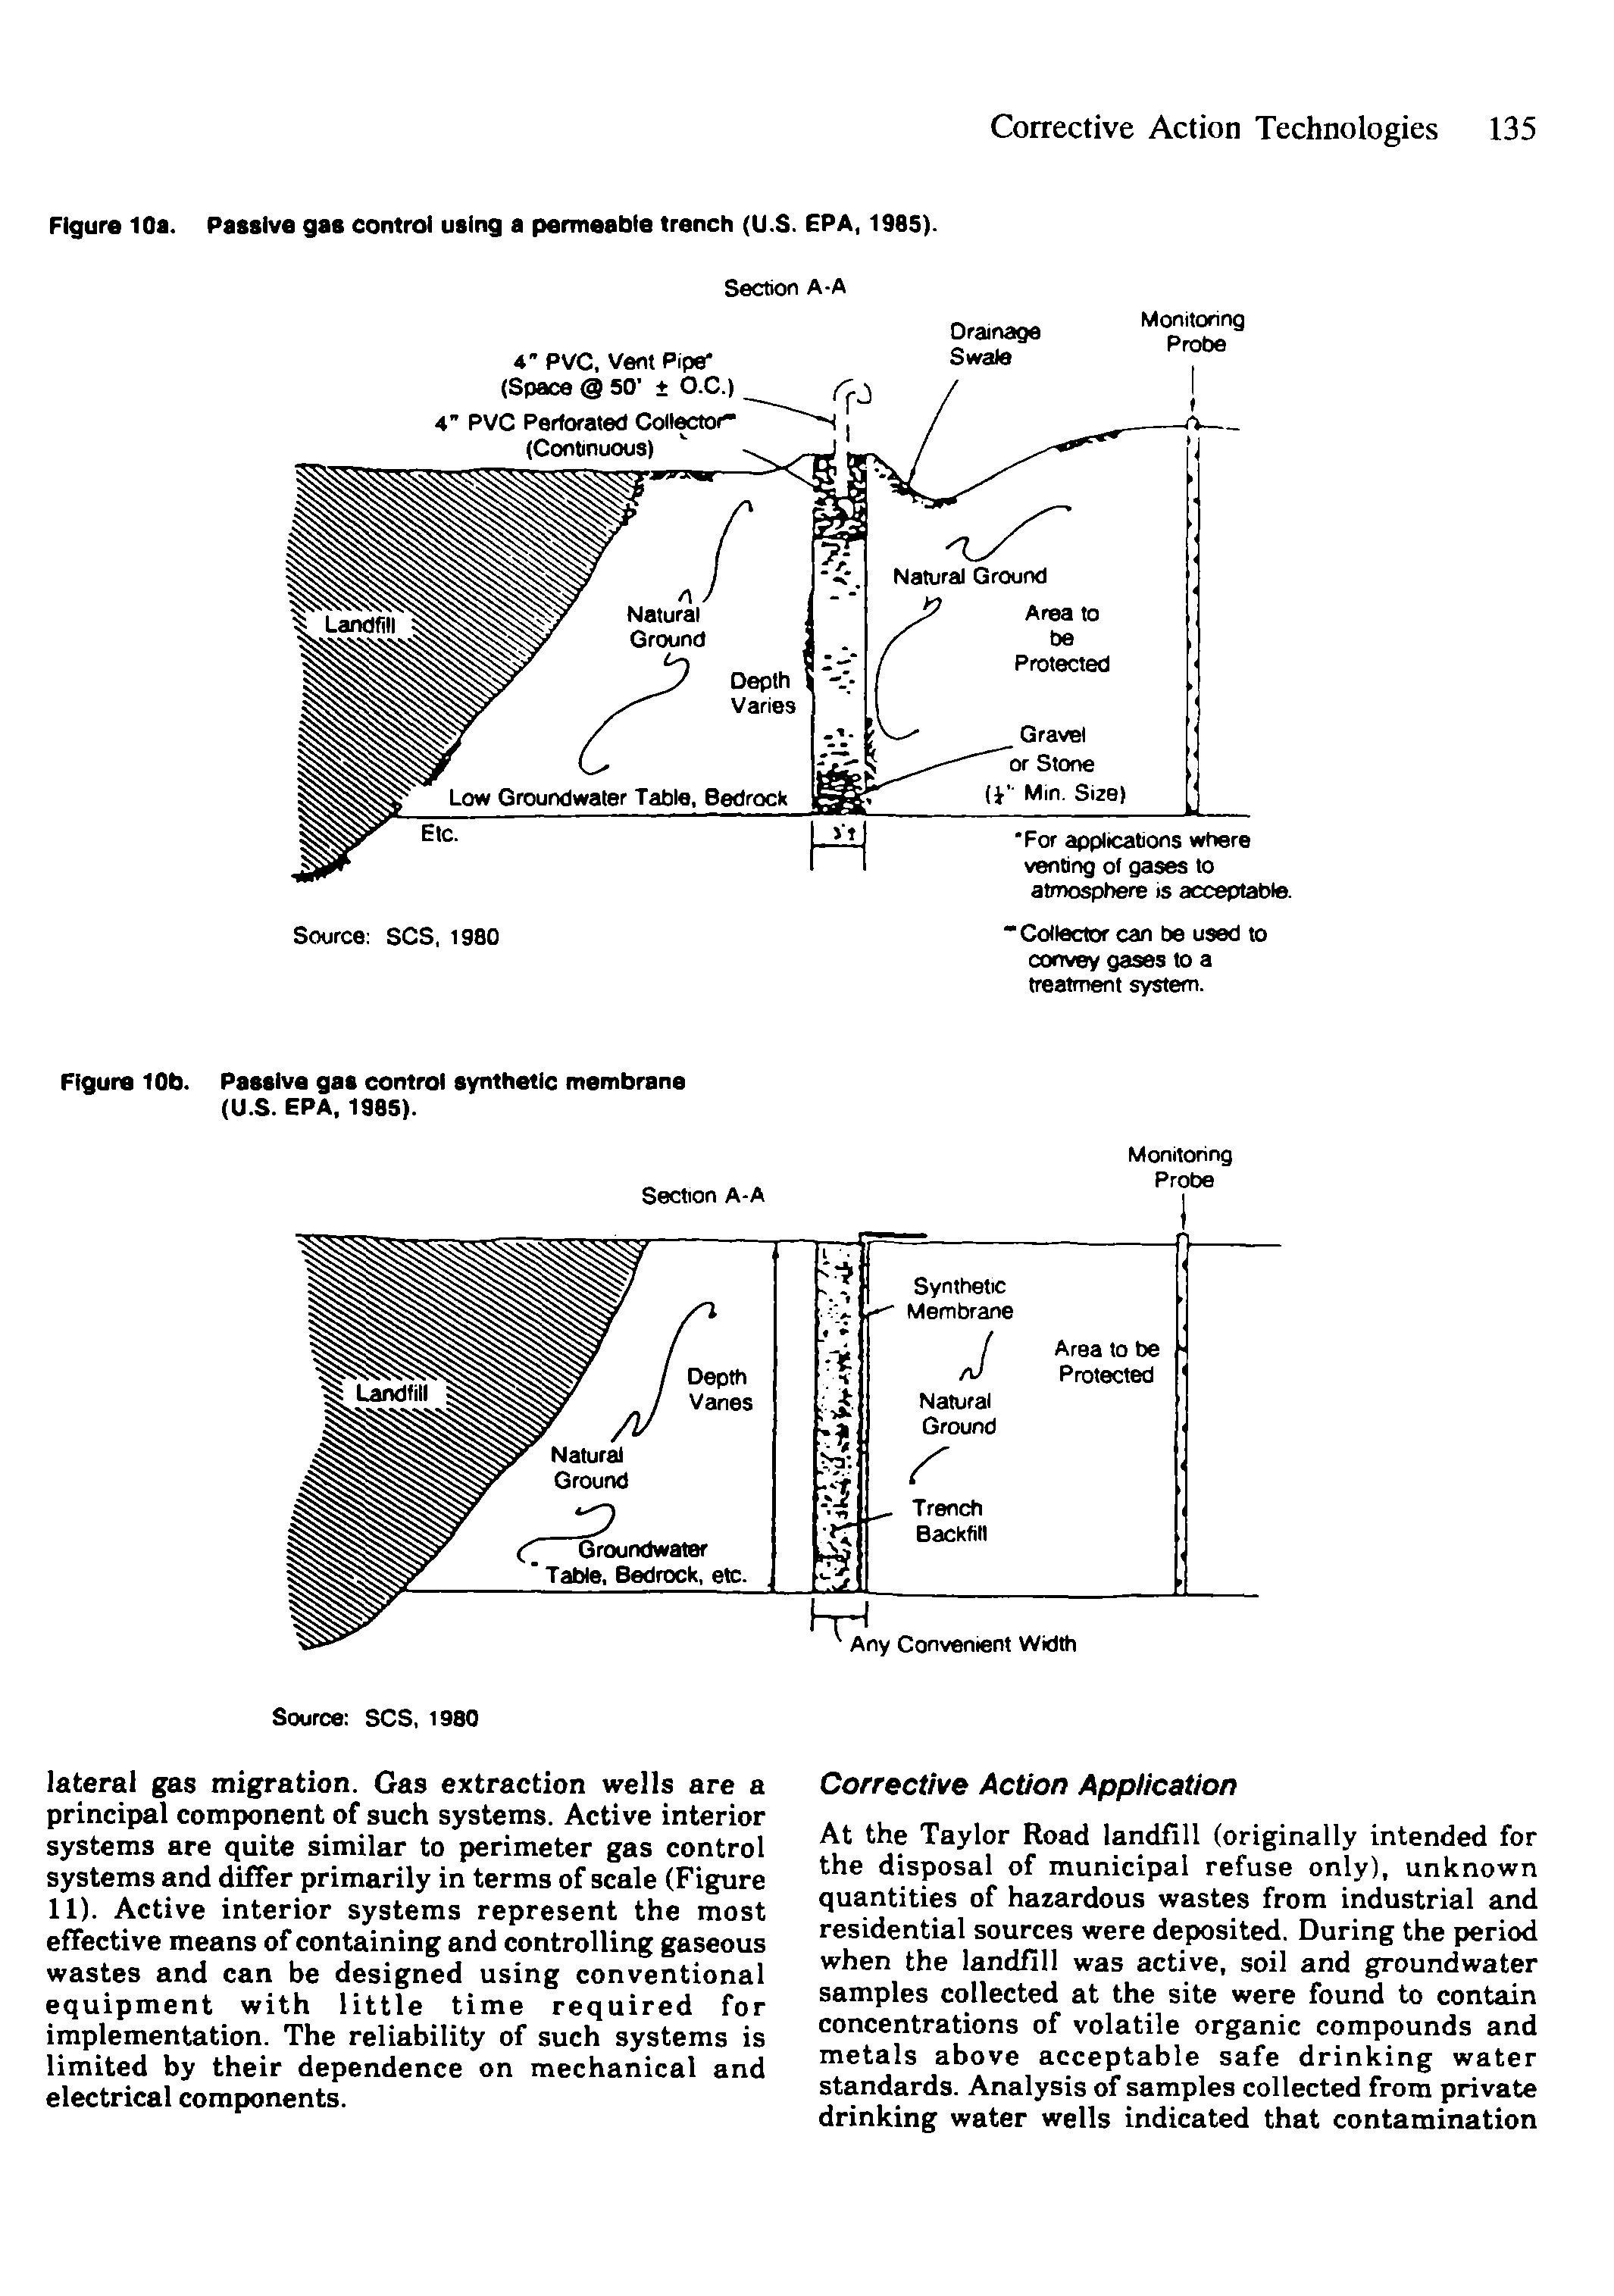 Figure 10a. Passive gas control using a permeable trench (U.S. EPA, 1985).